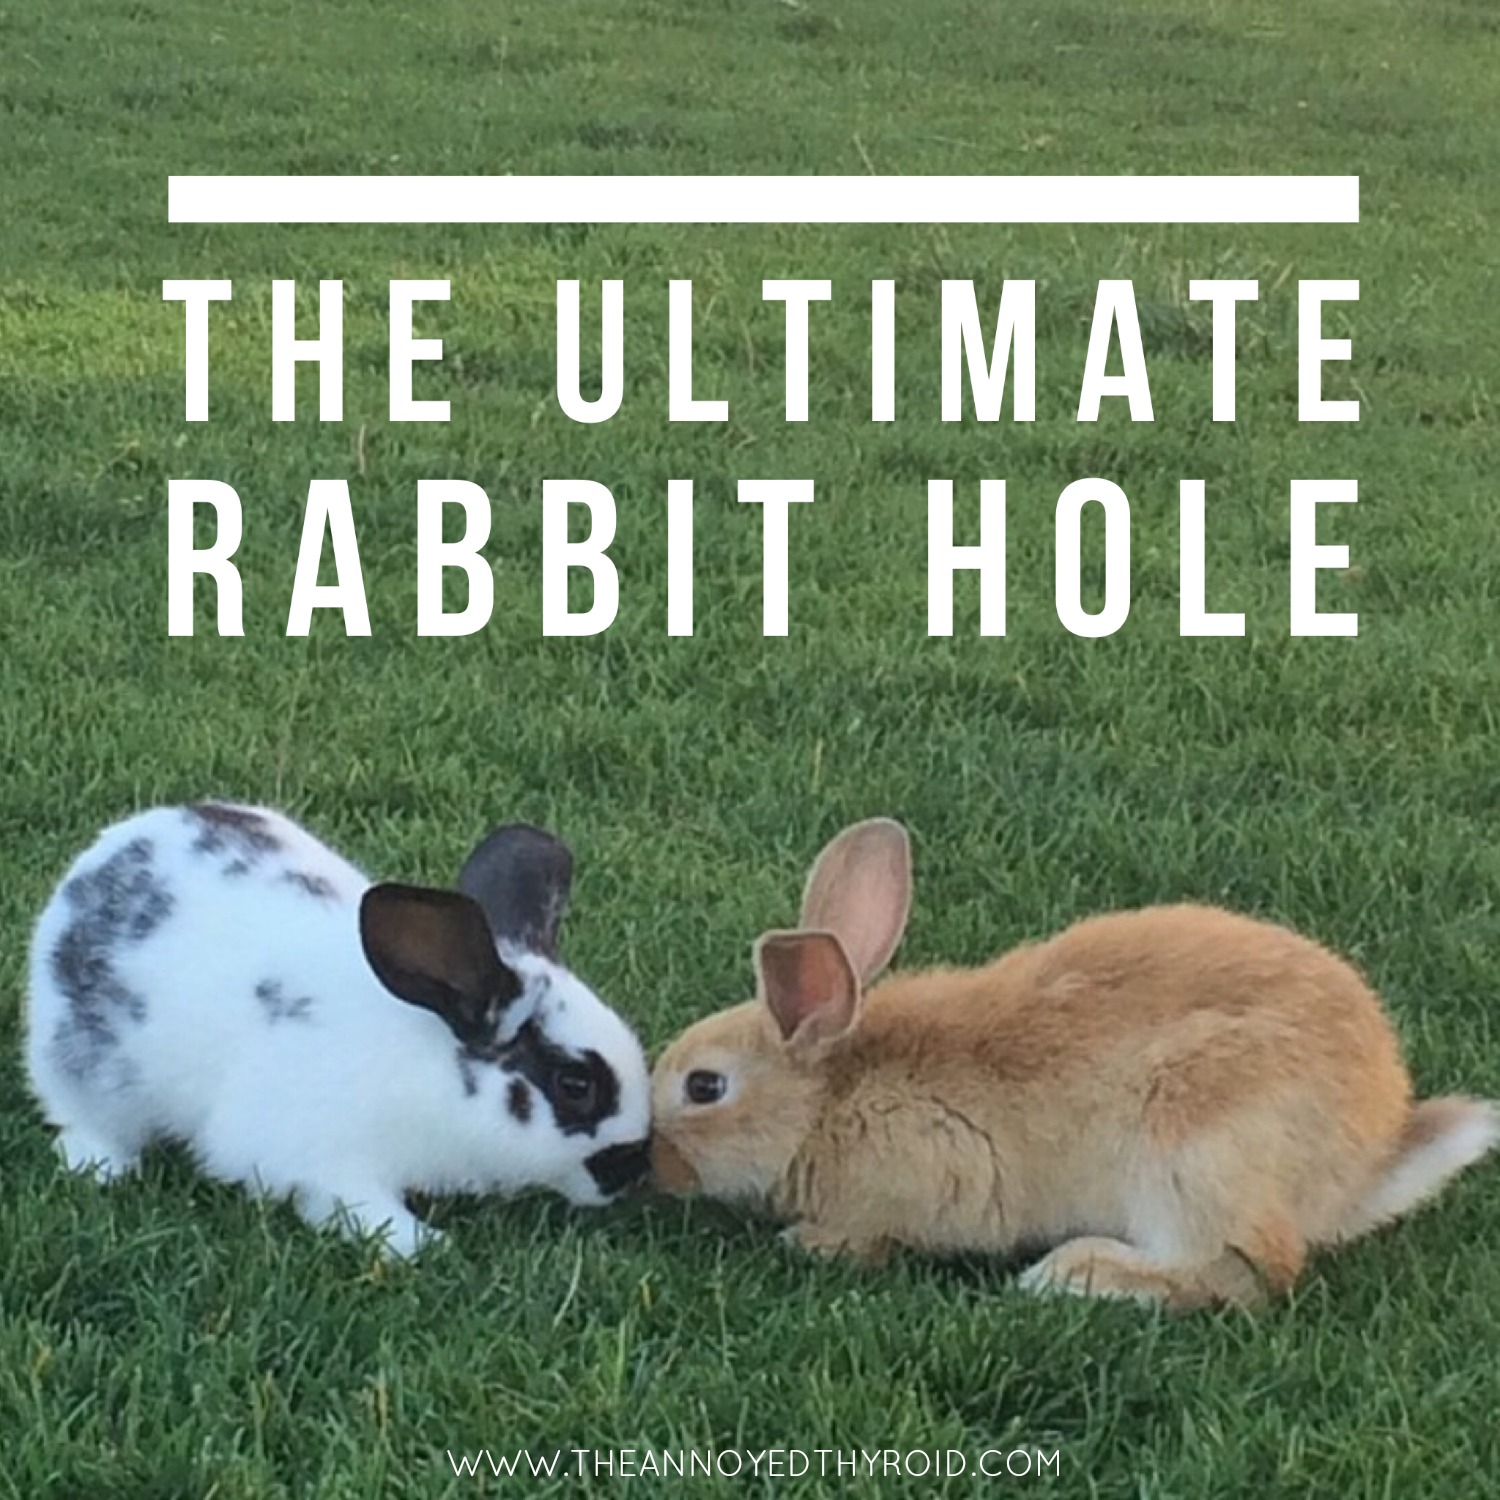 Rabbit hole download